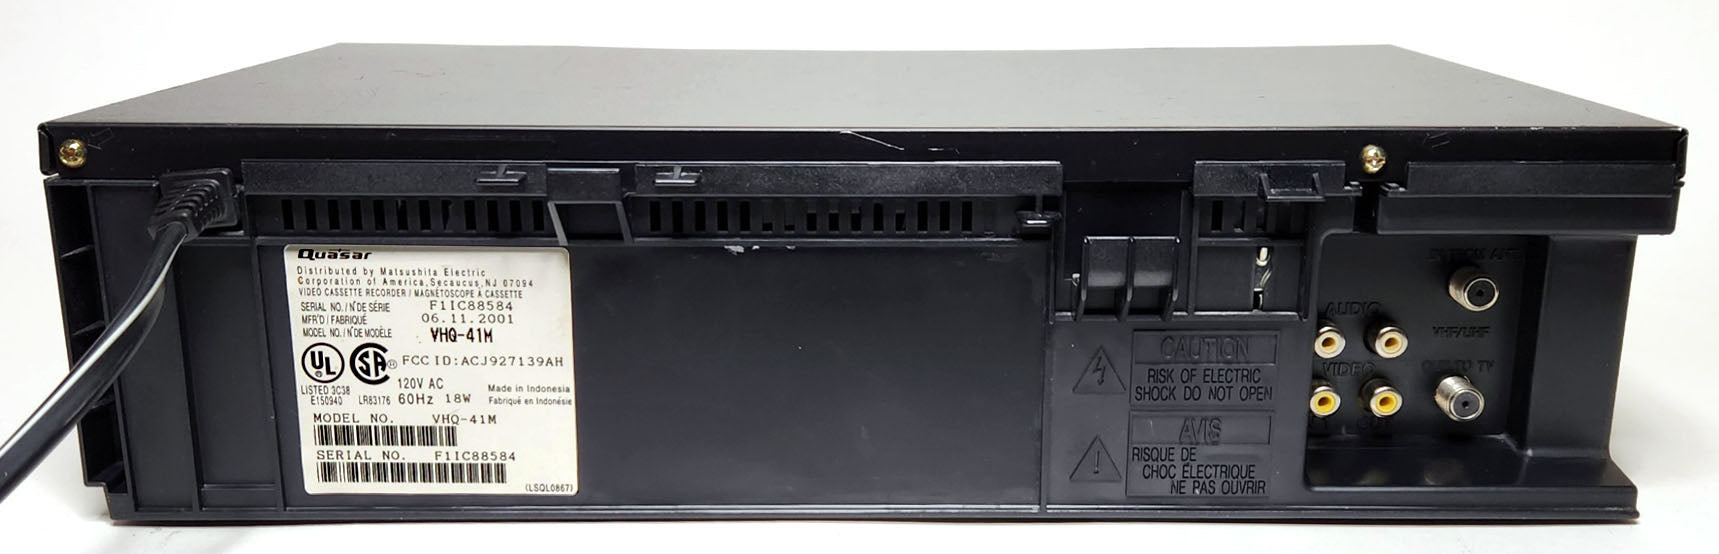 Quasar (Panasonic) VHQ-41M Omnivision VCR, 4-Head Mono - Rear